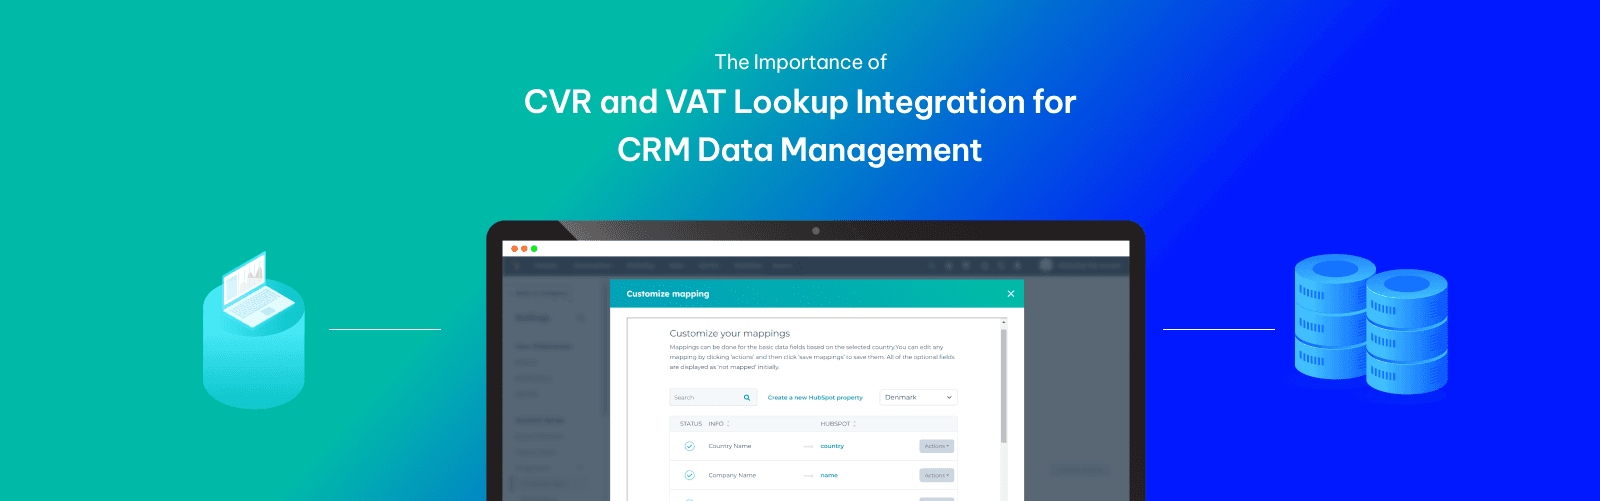 The Importance of CVR and VAT Lookup Integration for CRM Data Management